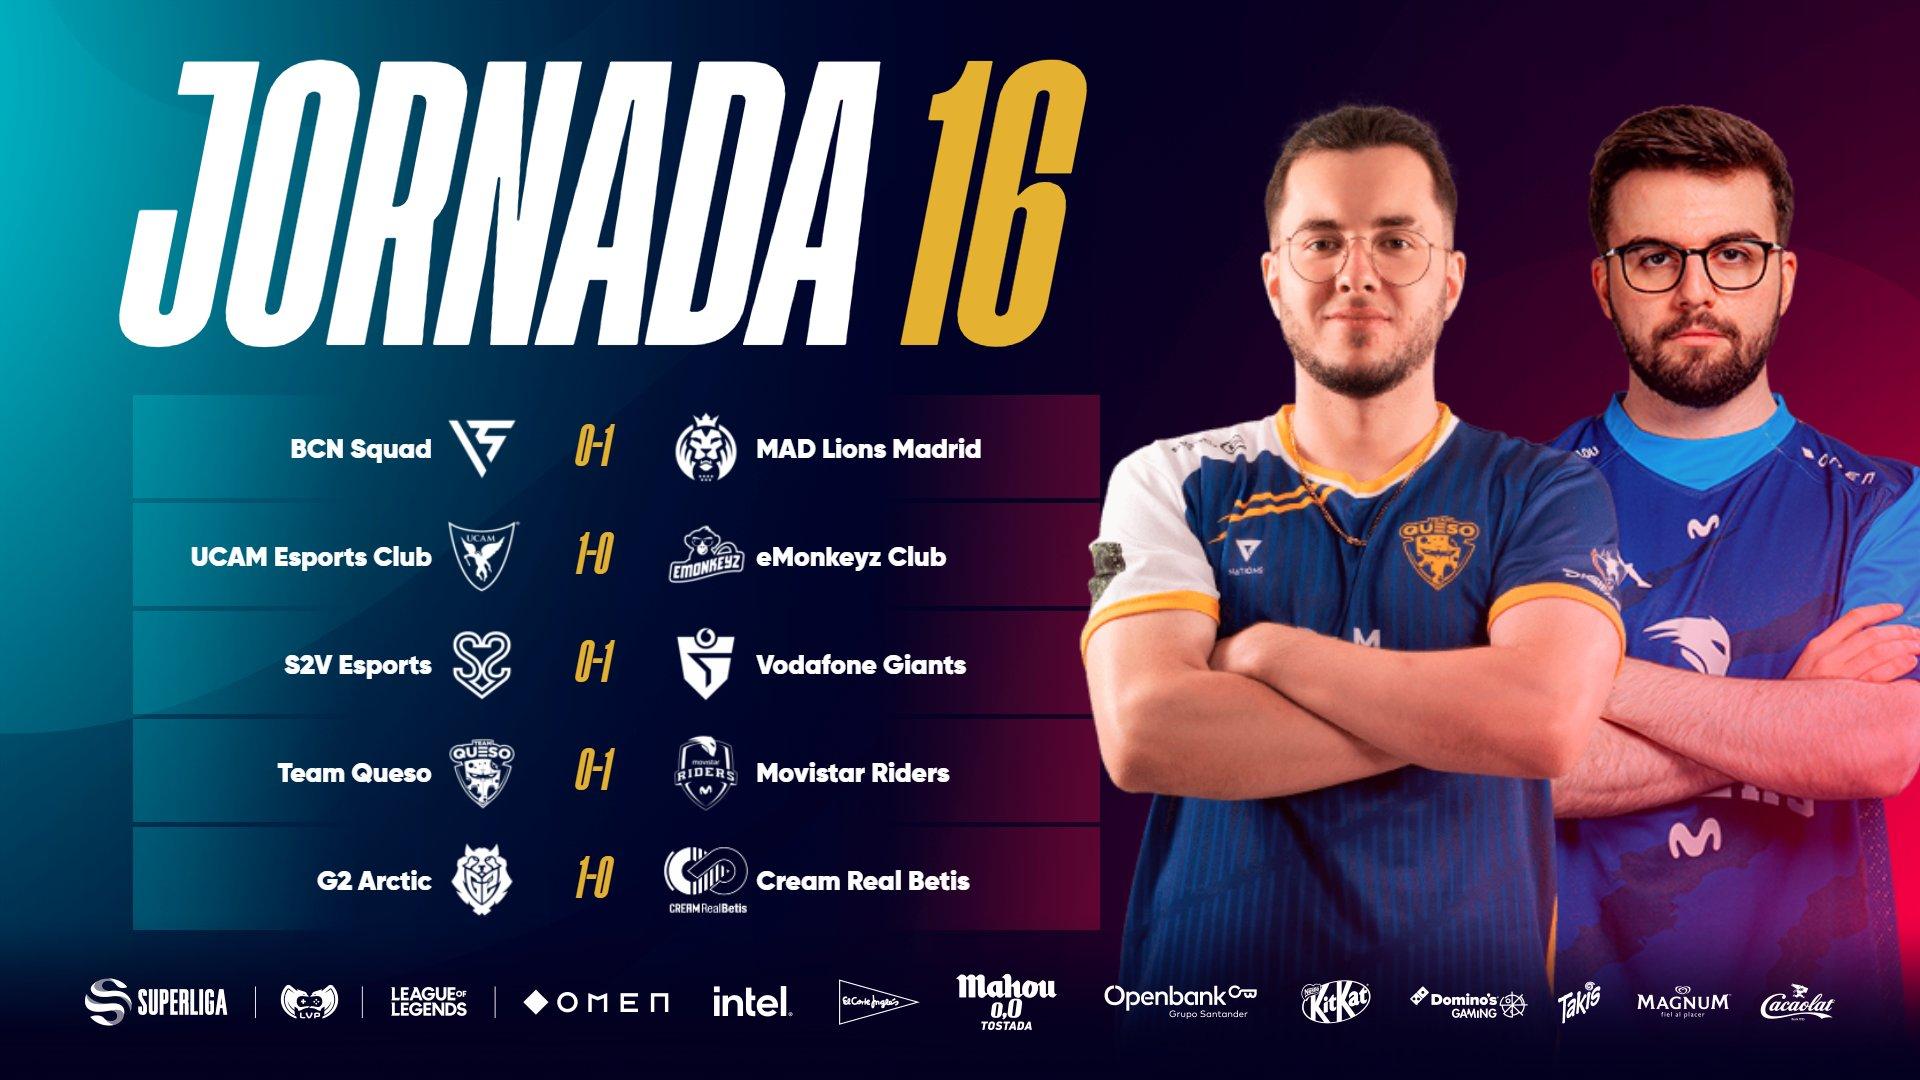 Superliga Jornada 16